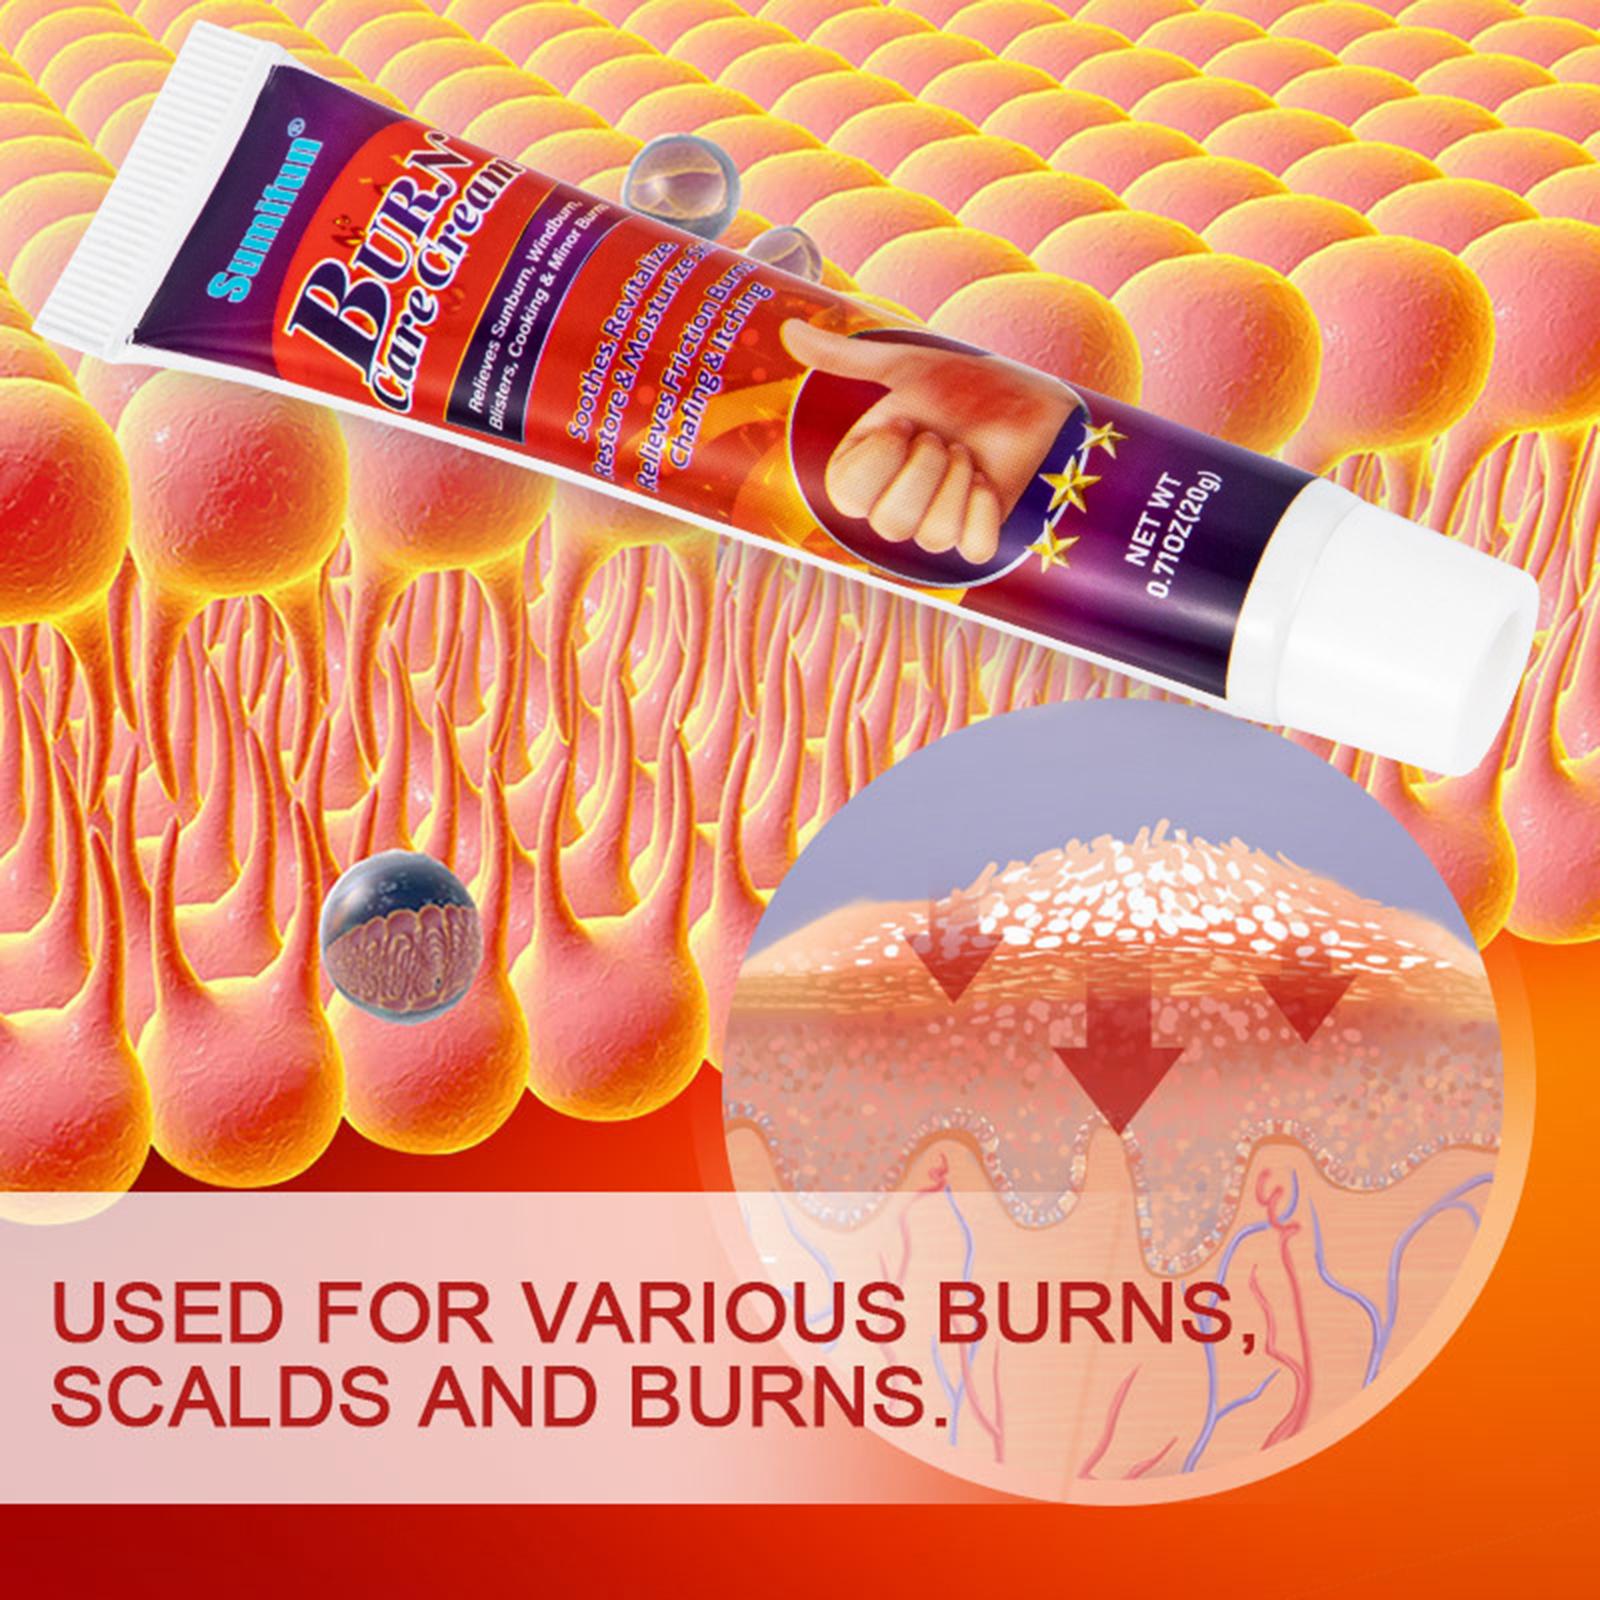 Sumifun 20g Skin Burn Care Cream Relieve Sunburn Windburn Blisters Cooking Burns Healing Care Moisturize Skin